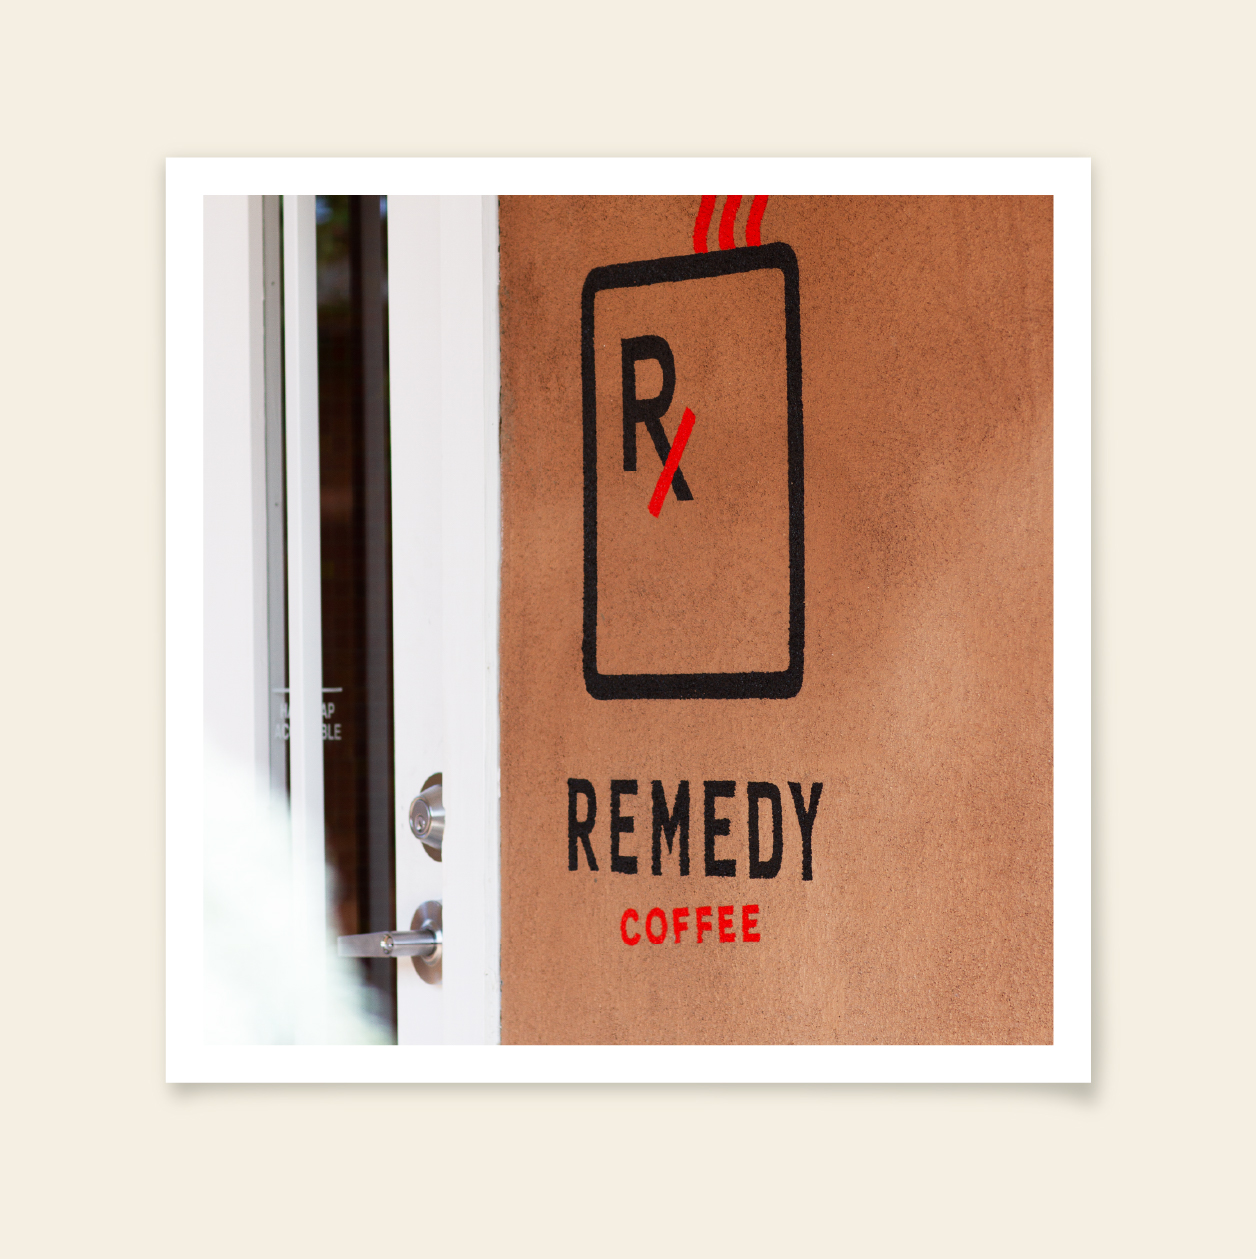 Remedy Coffee Image